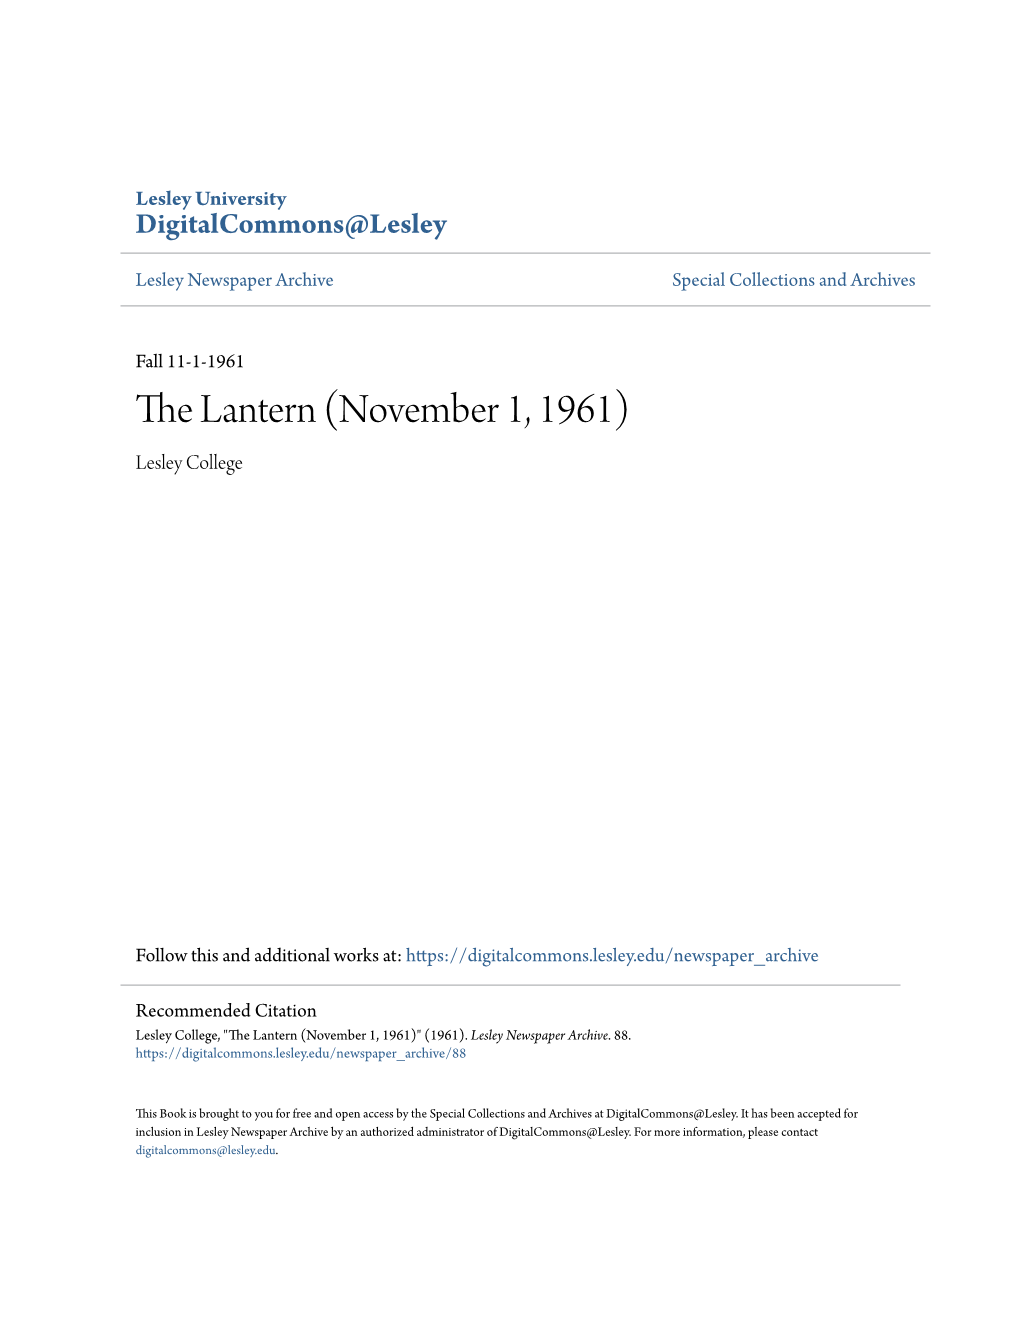 The Lantern (November 1, 1961) Lesley College